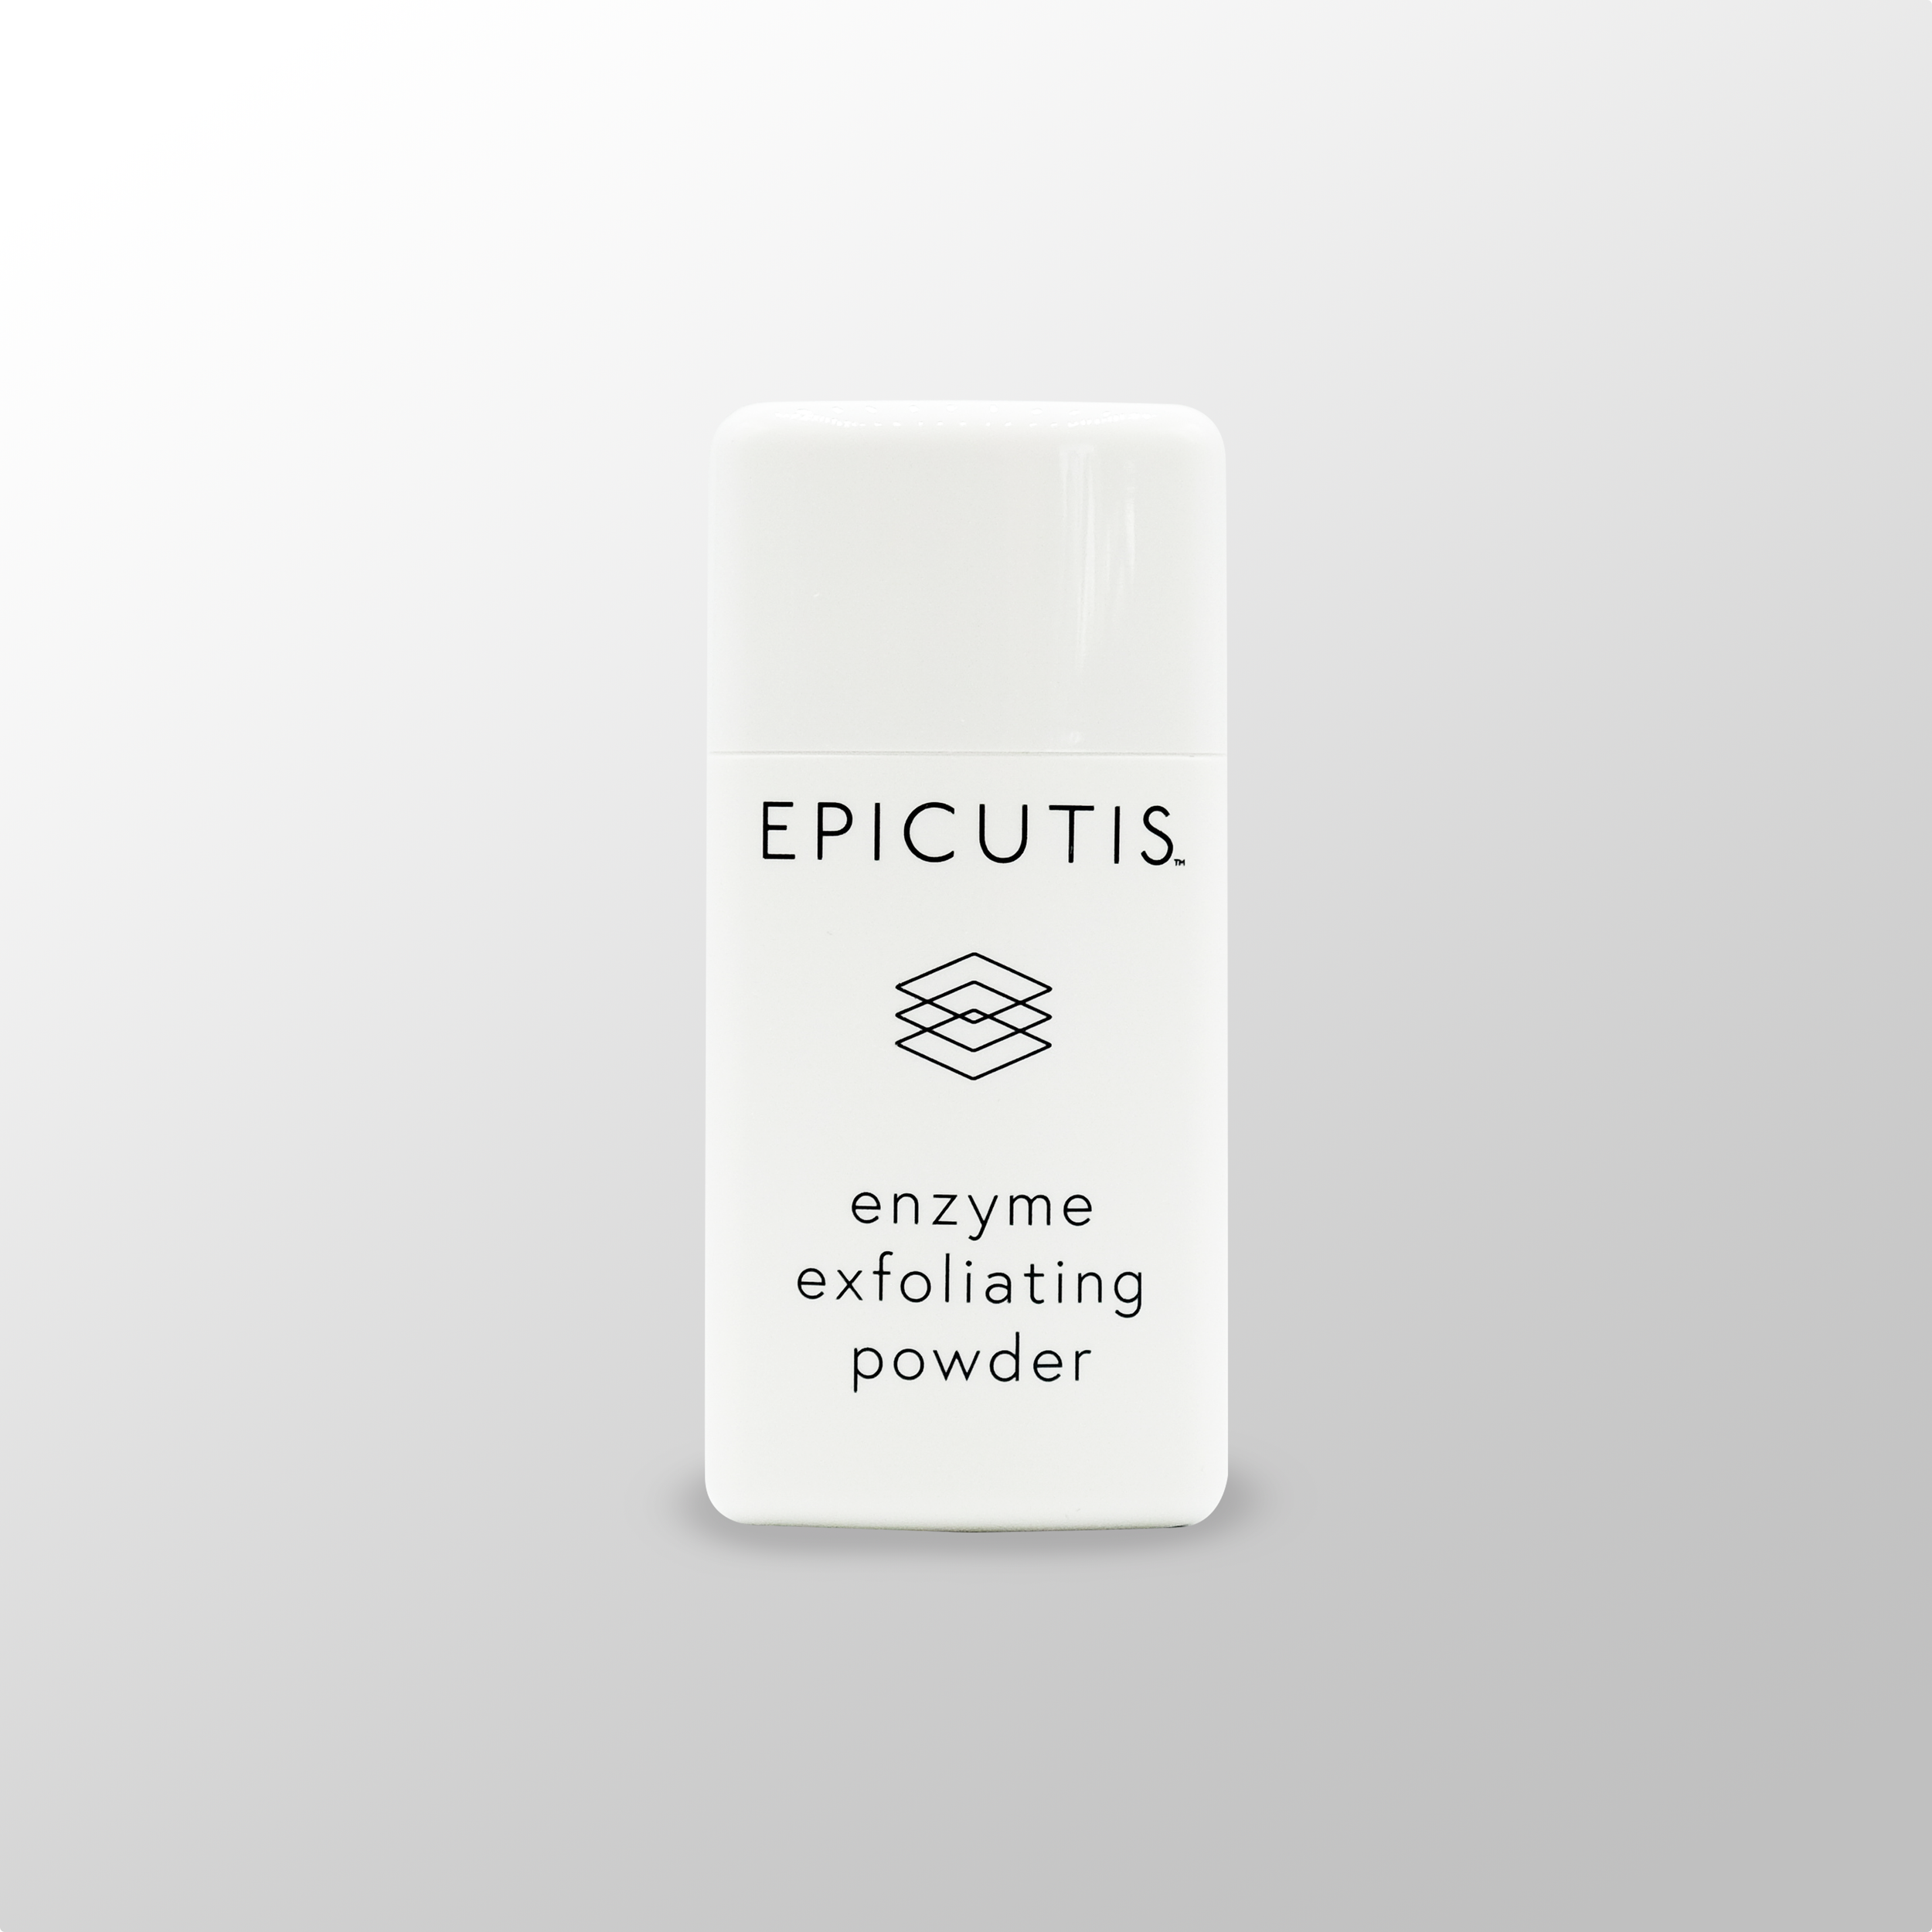 Epicutis Enzyme Exfoliating Powder Website.png